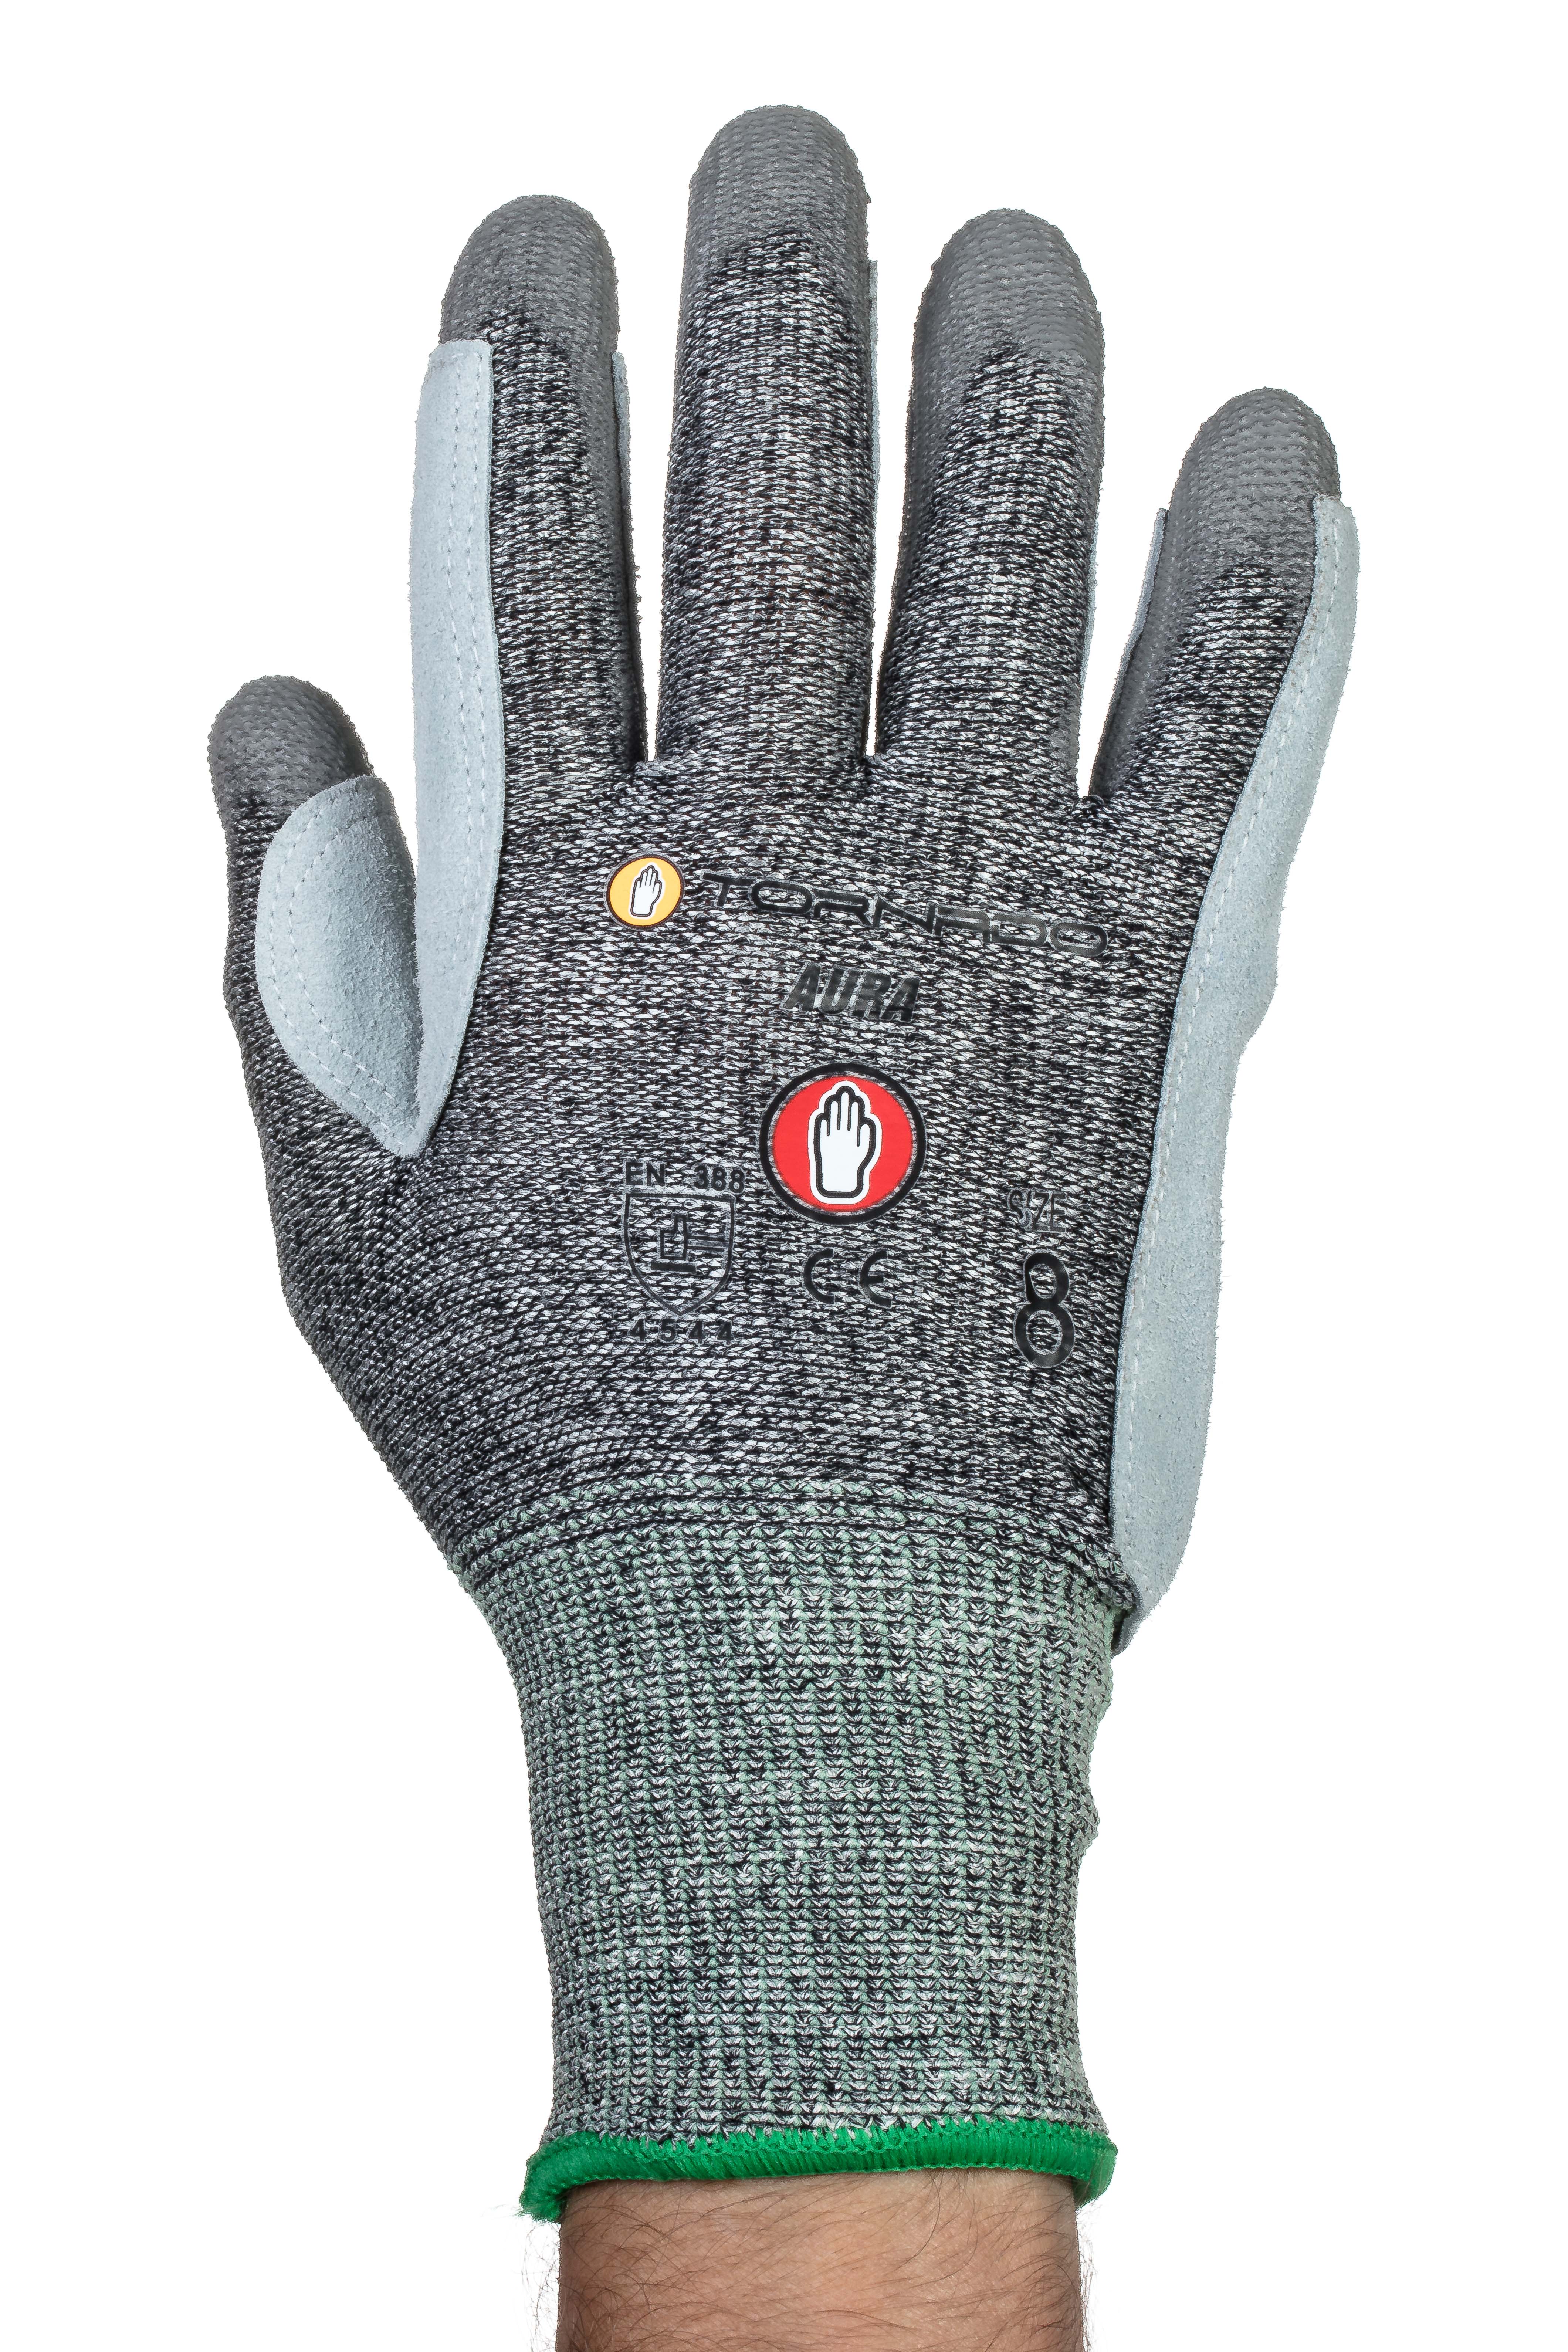 TORNADO Aura Kevlar Gloves Cut Level 5 - Medium Size: 8 Leather palm for maximum protection